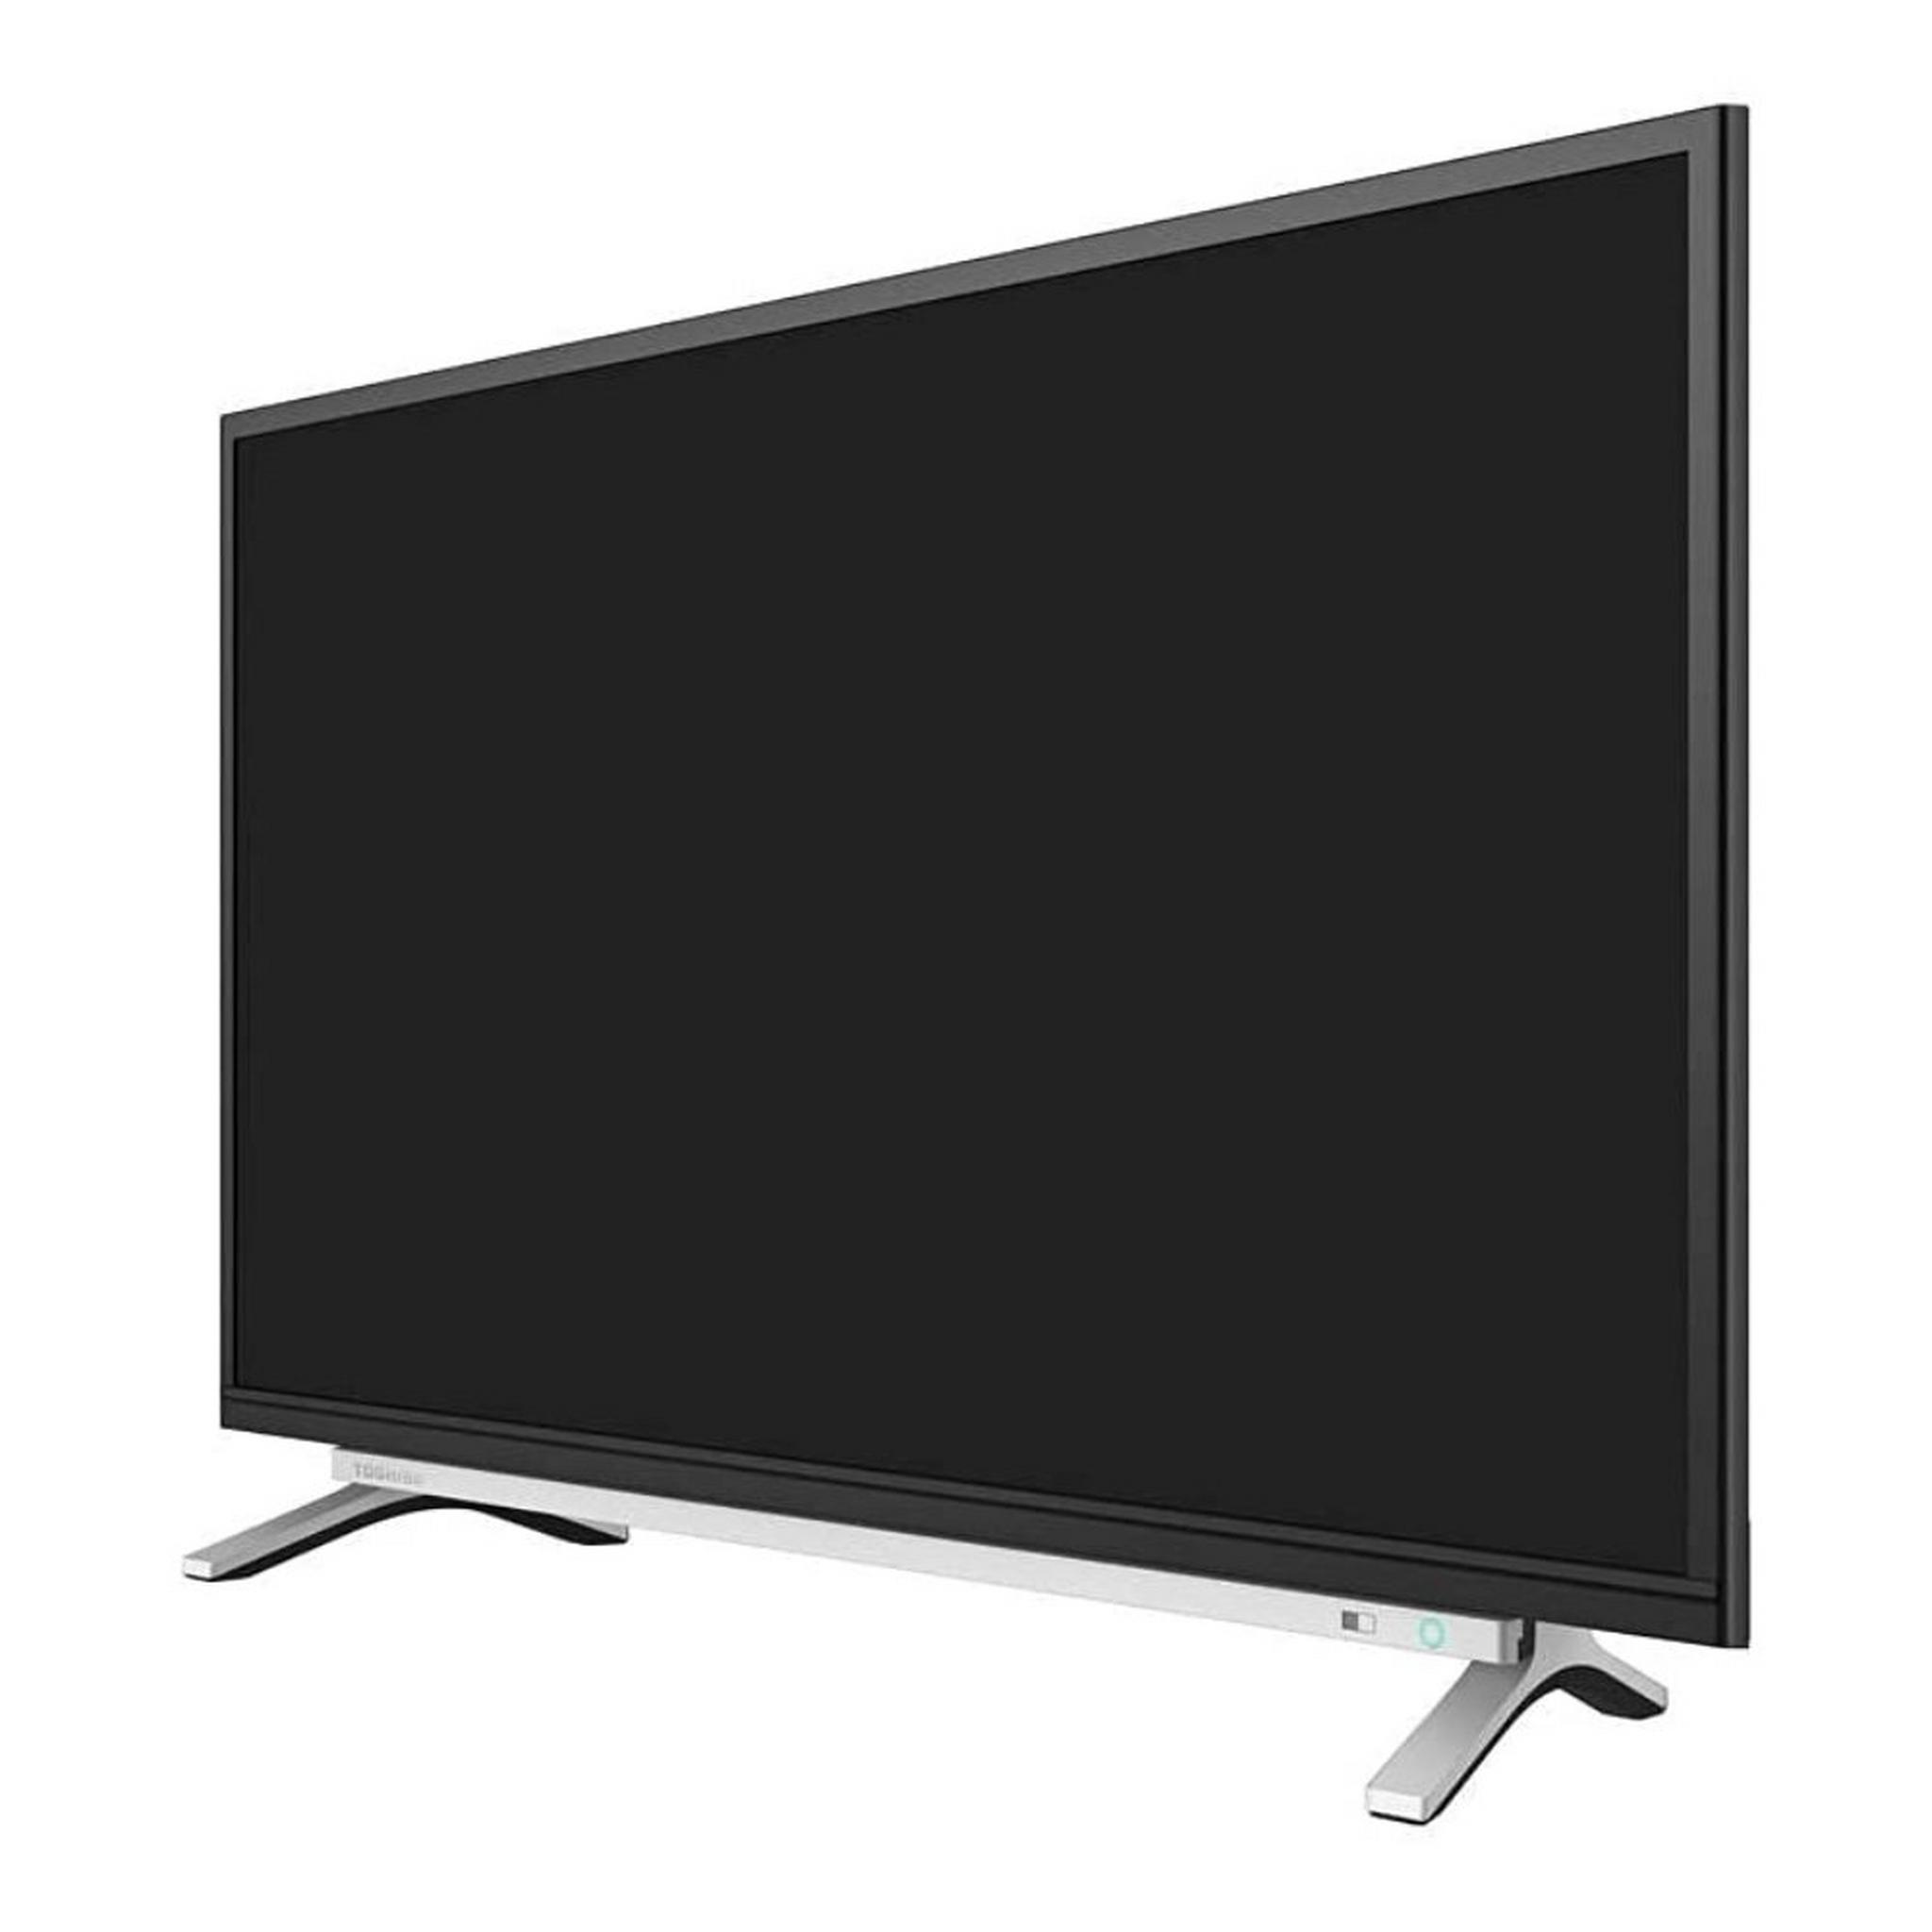 تلفزيون توشيبا بحجم 32 بوصة أندرويد ال اي دي 2 كي (32L5995EE)